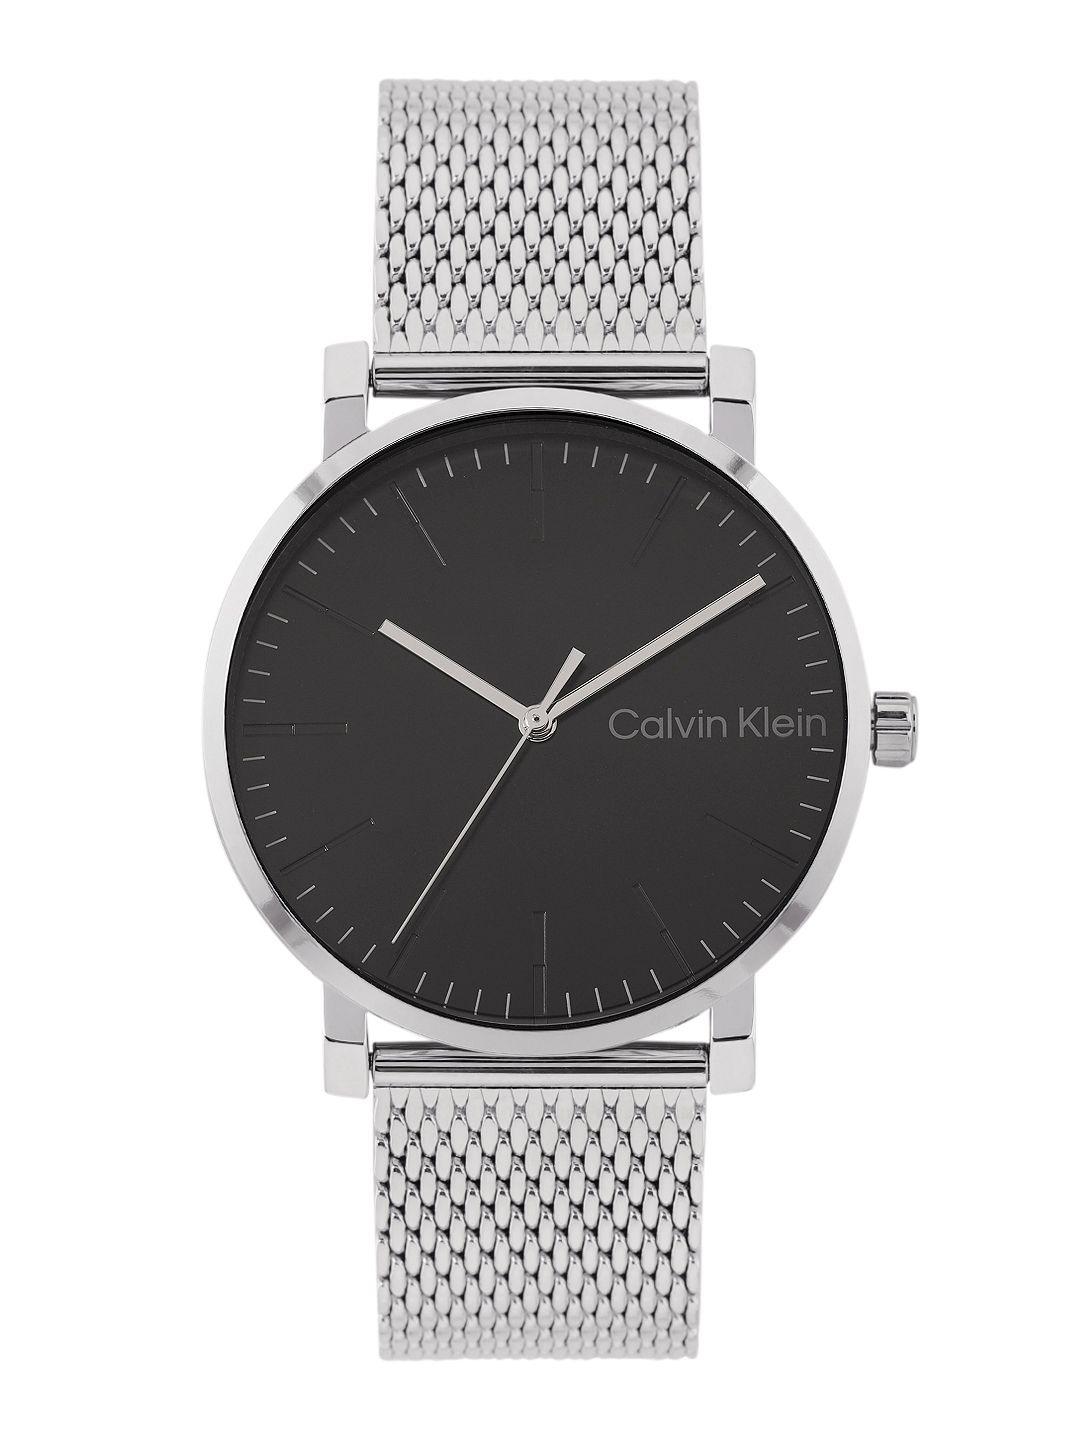 calvin klein men slate stainless steel bracelet style analogue watch 25200260